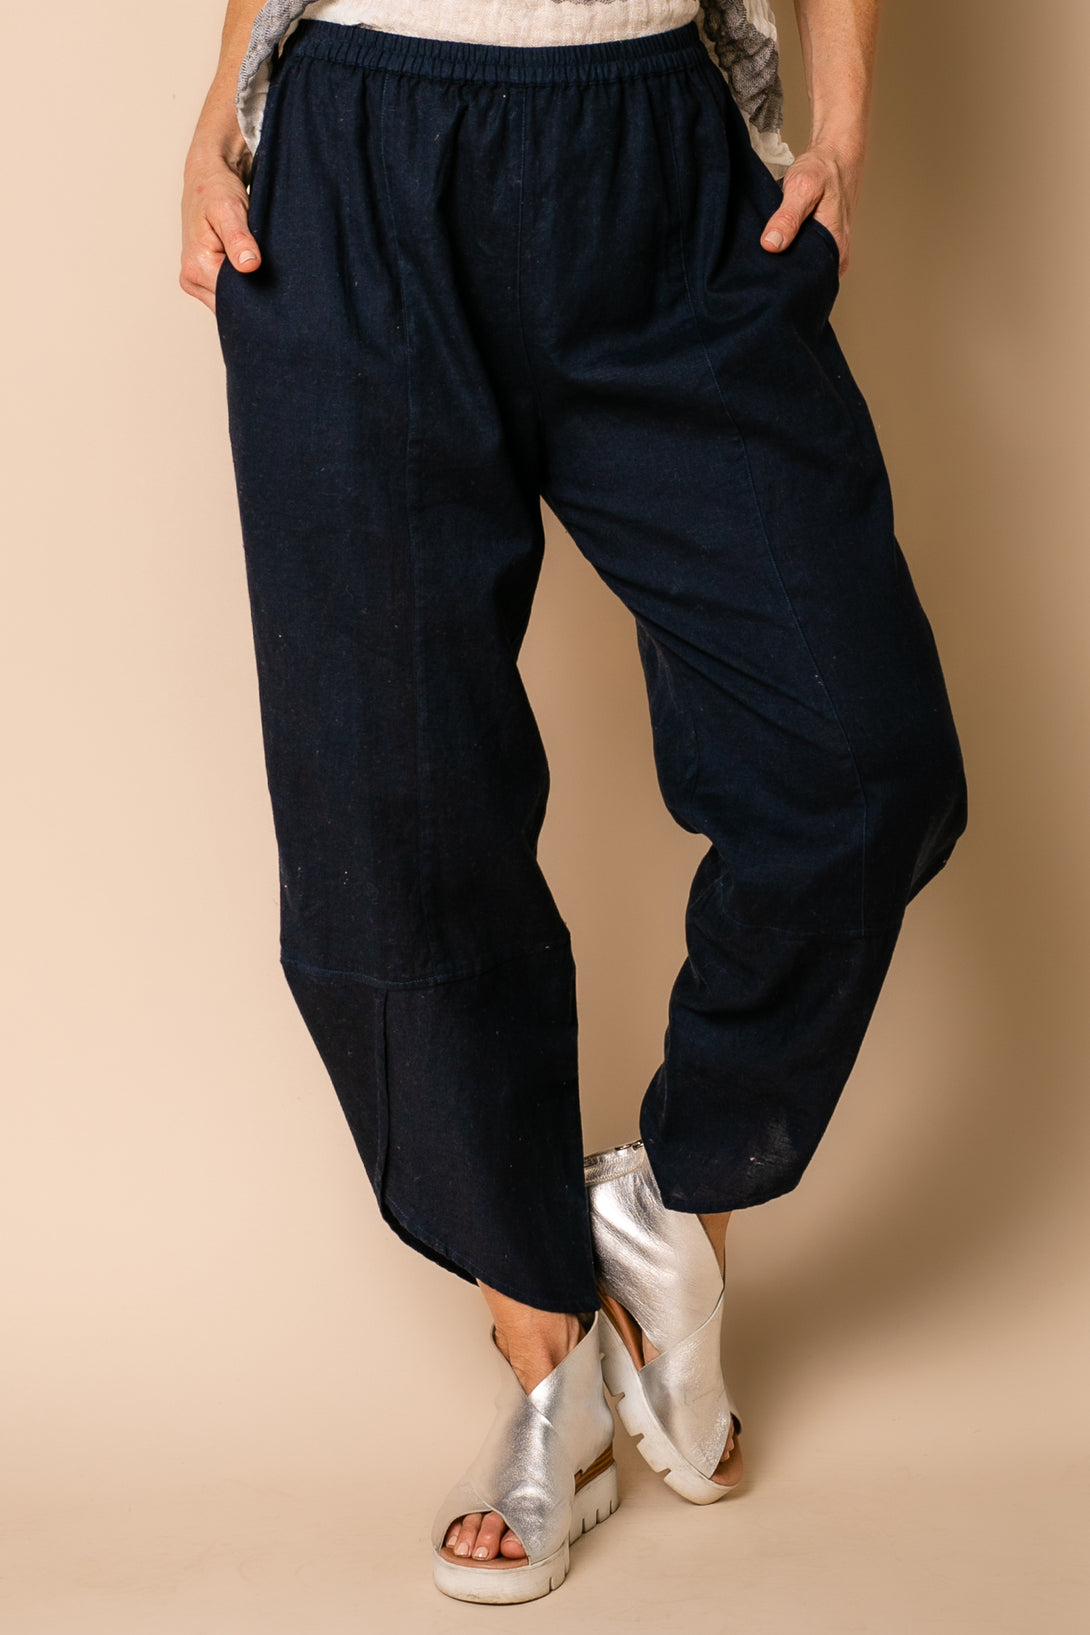 Rowen Linen Blend Pants in Navy - Imagine Fashion